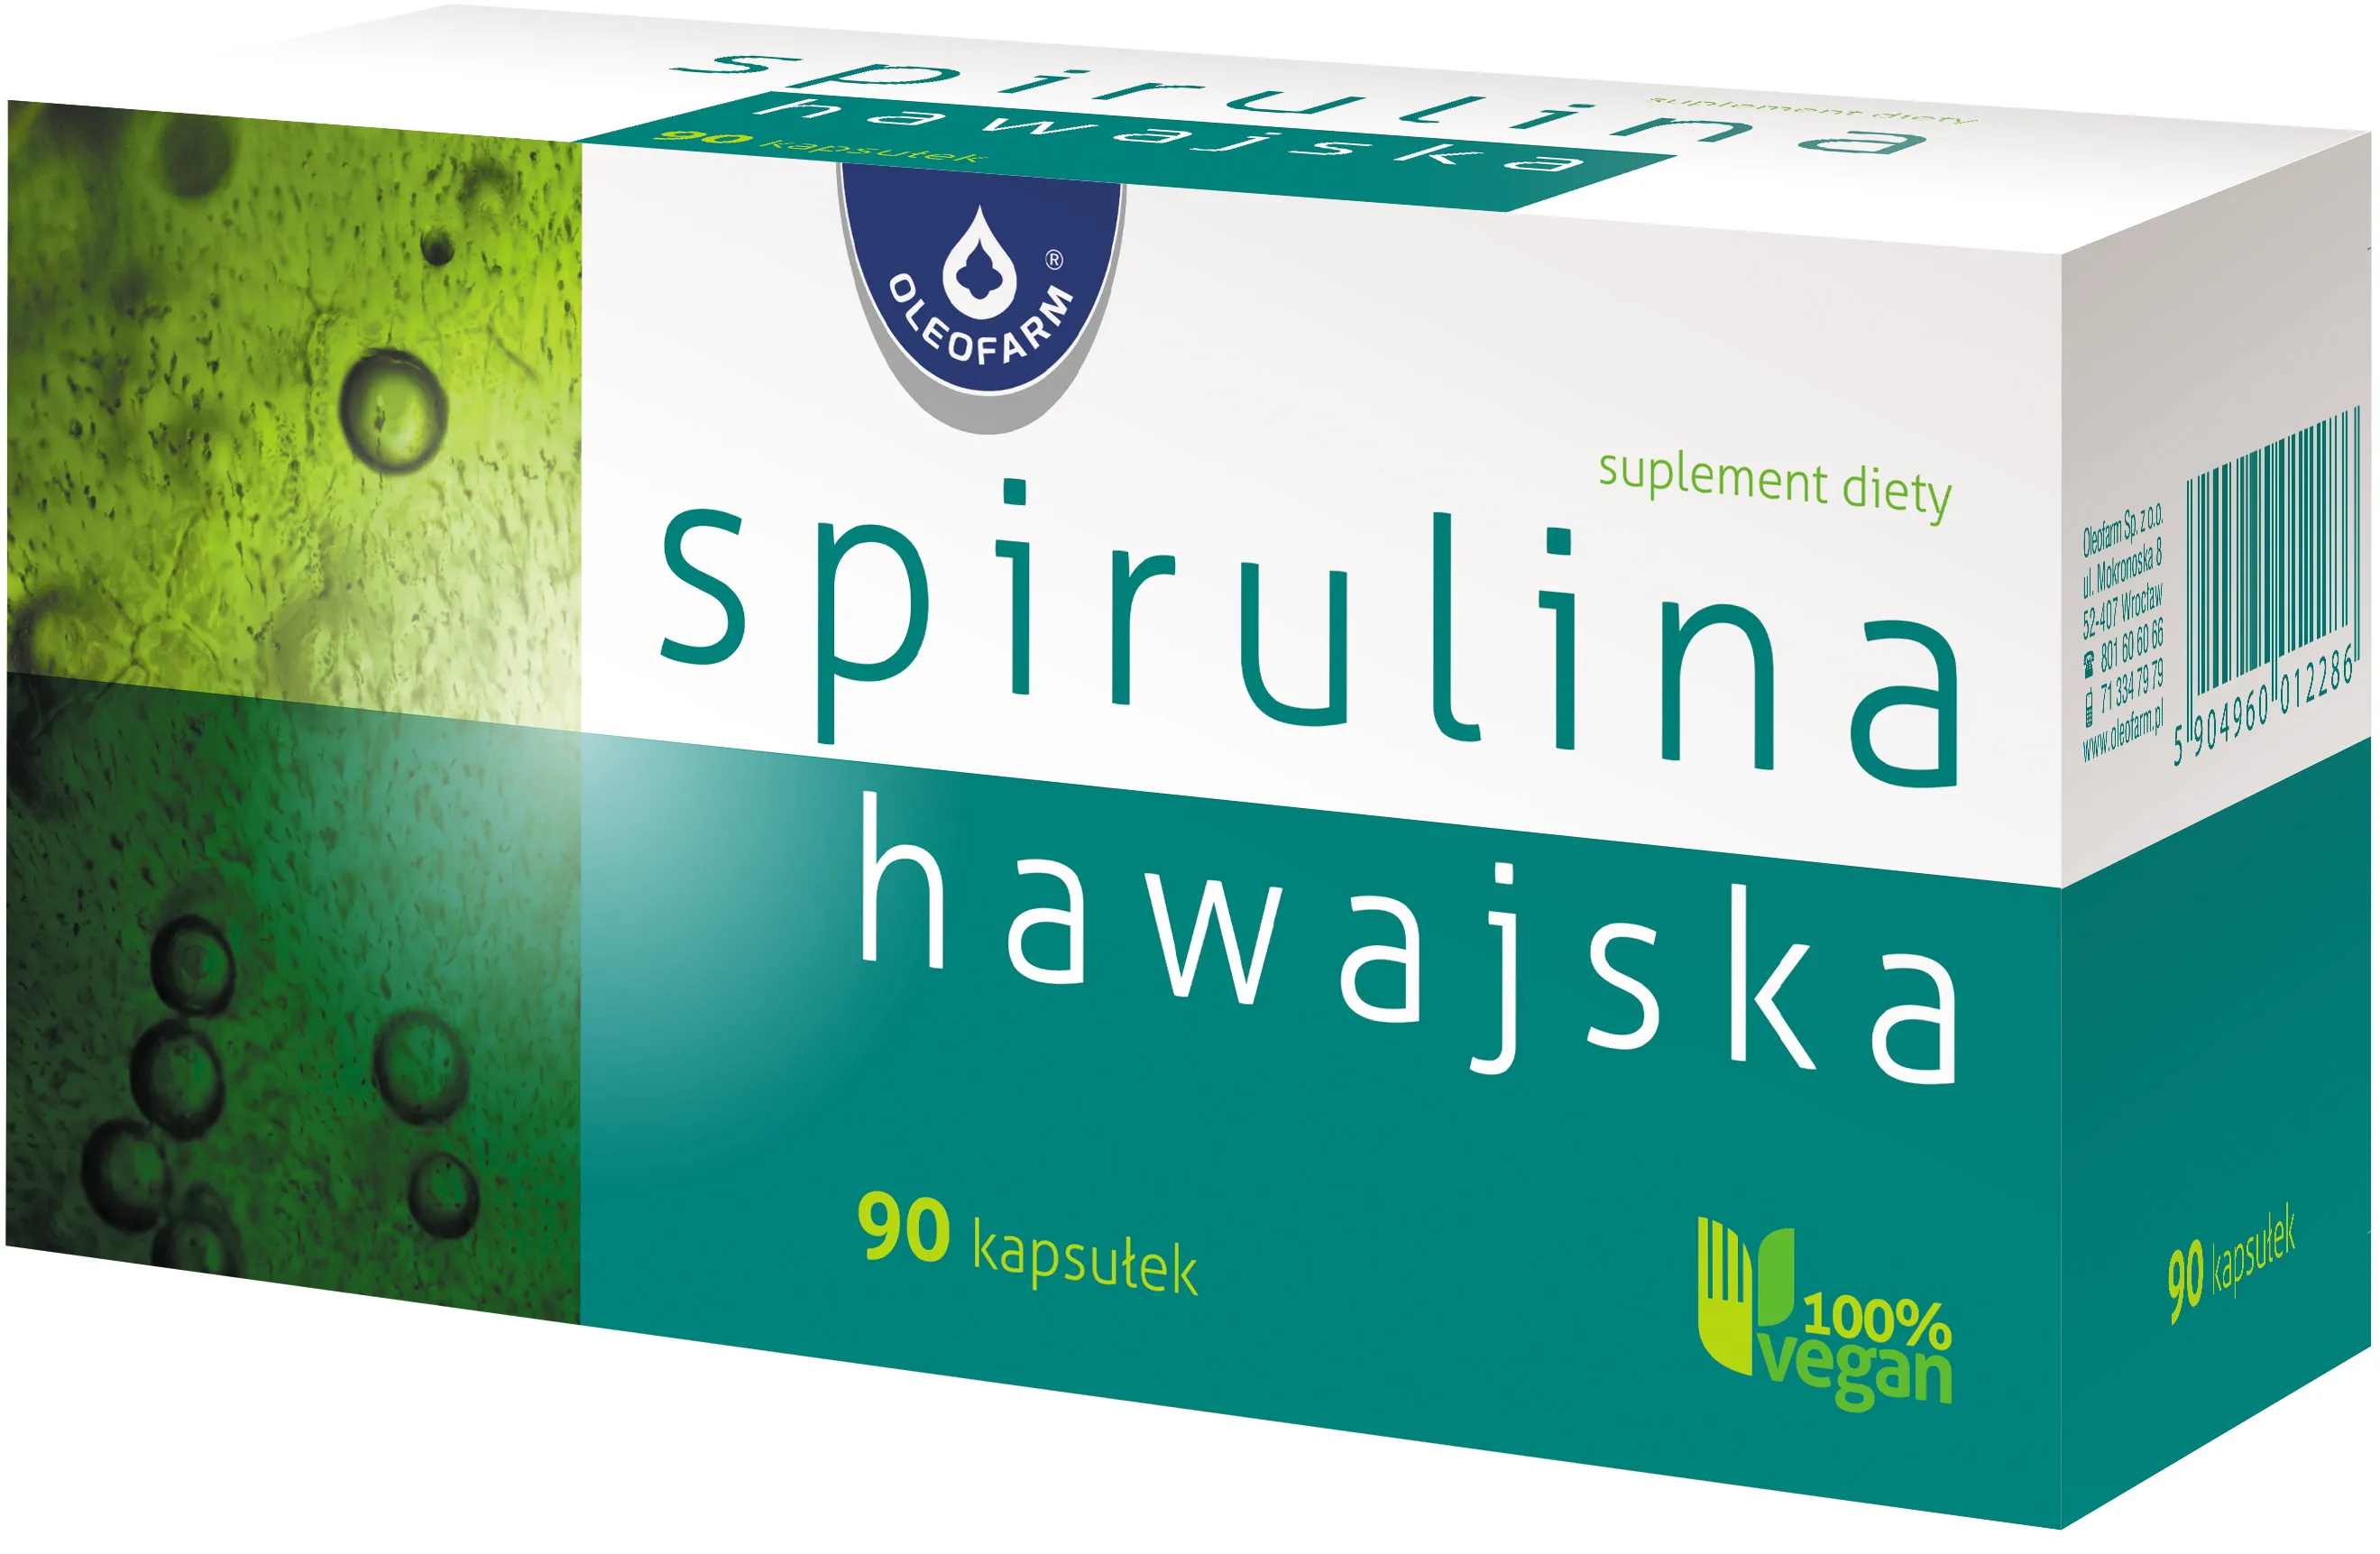 Spirulina hawajska, suplement diety, 90 kapsułek